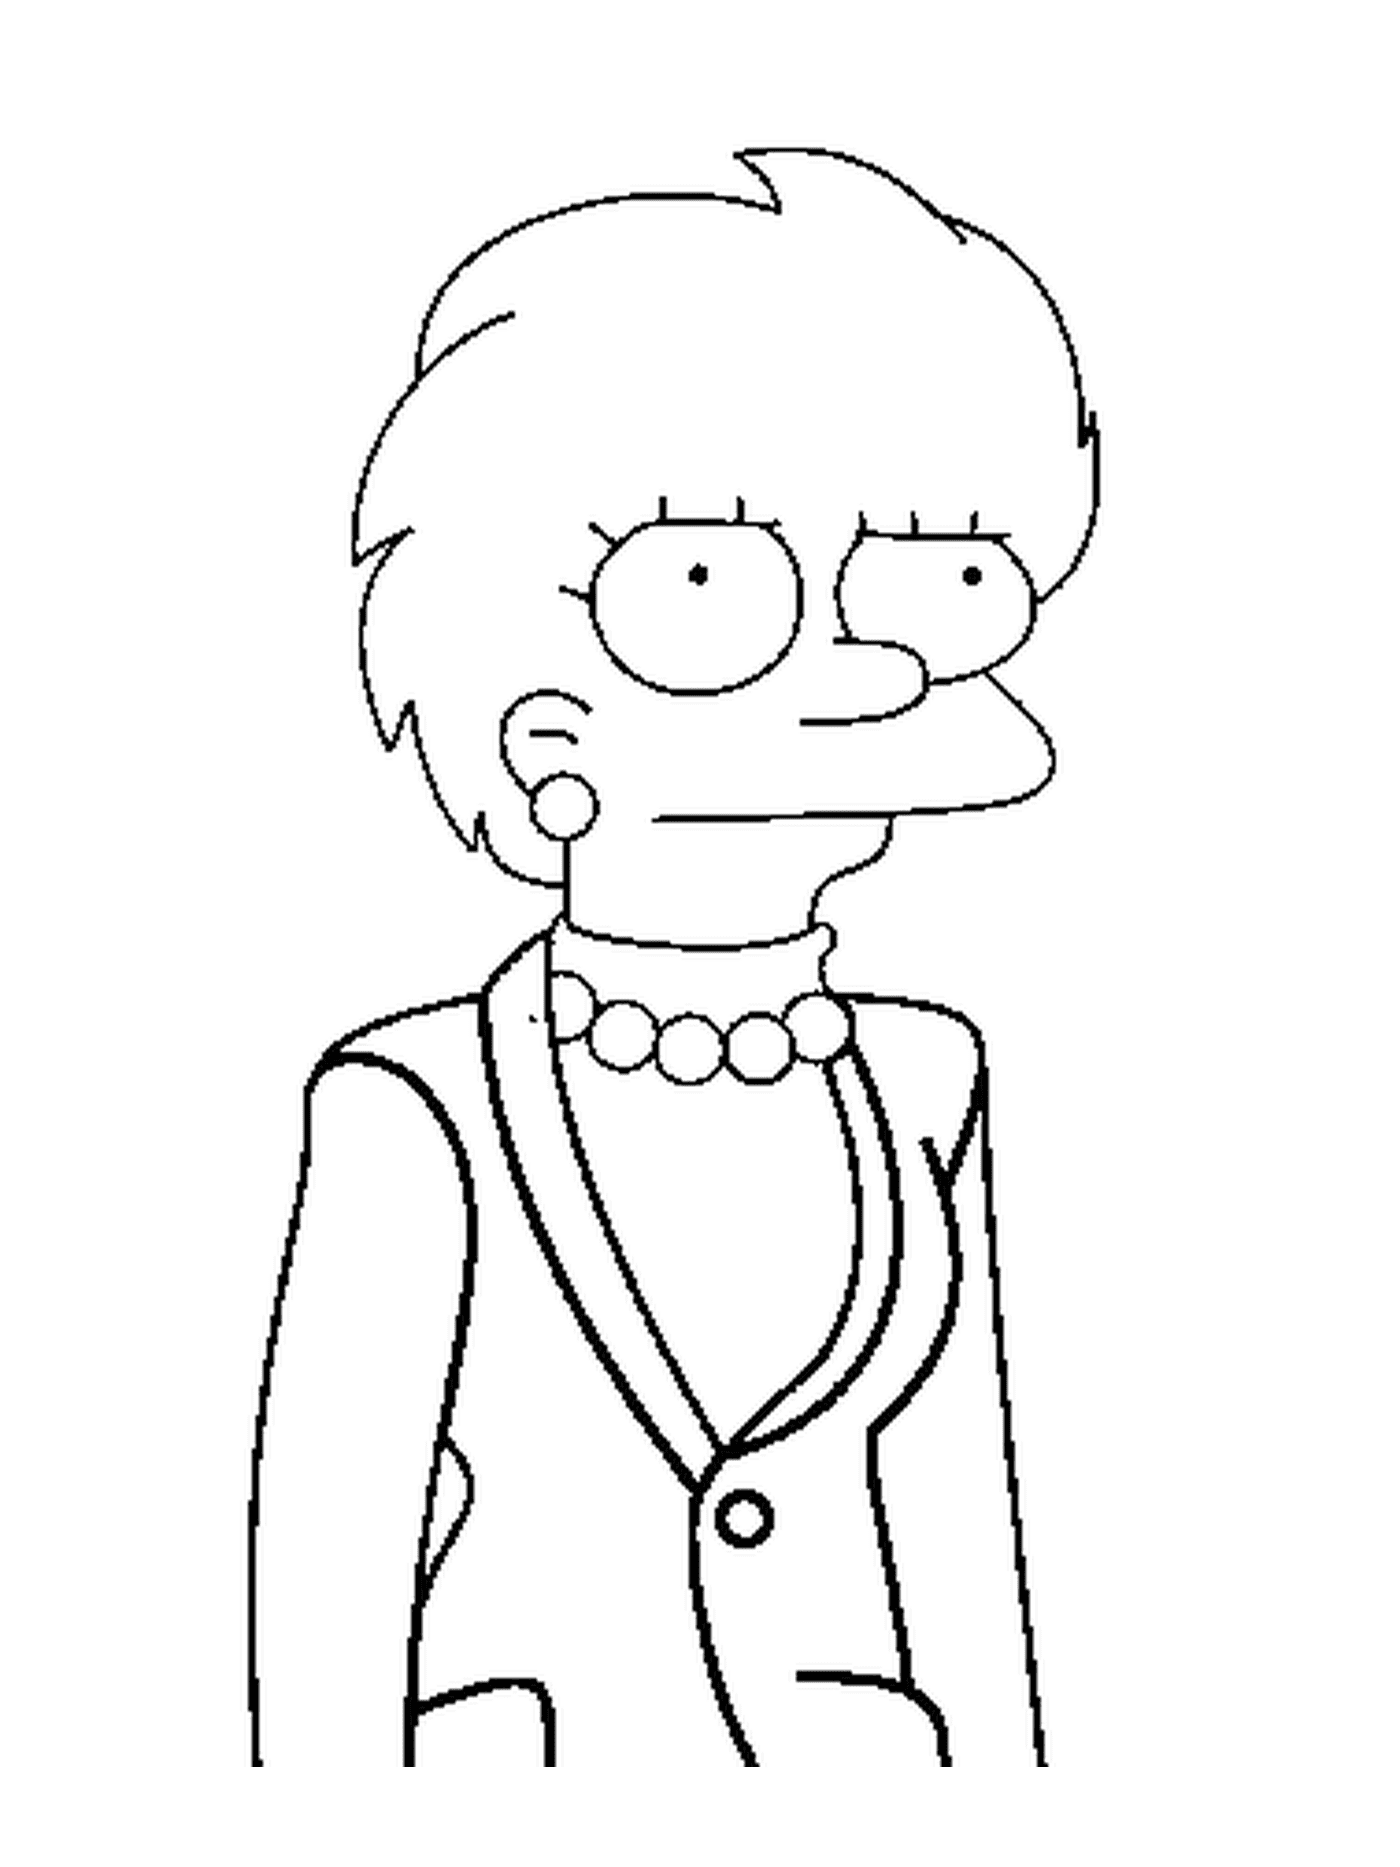  Lisa Simpson, futura presidenta 